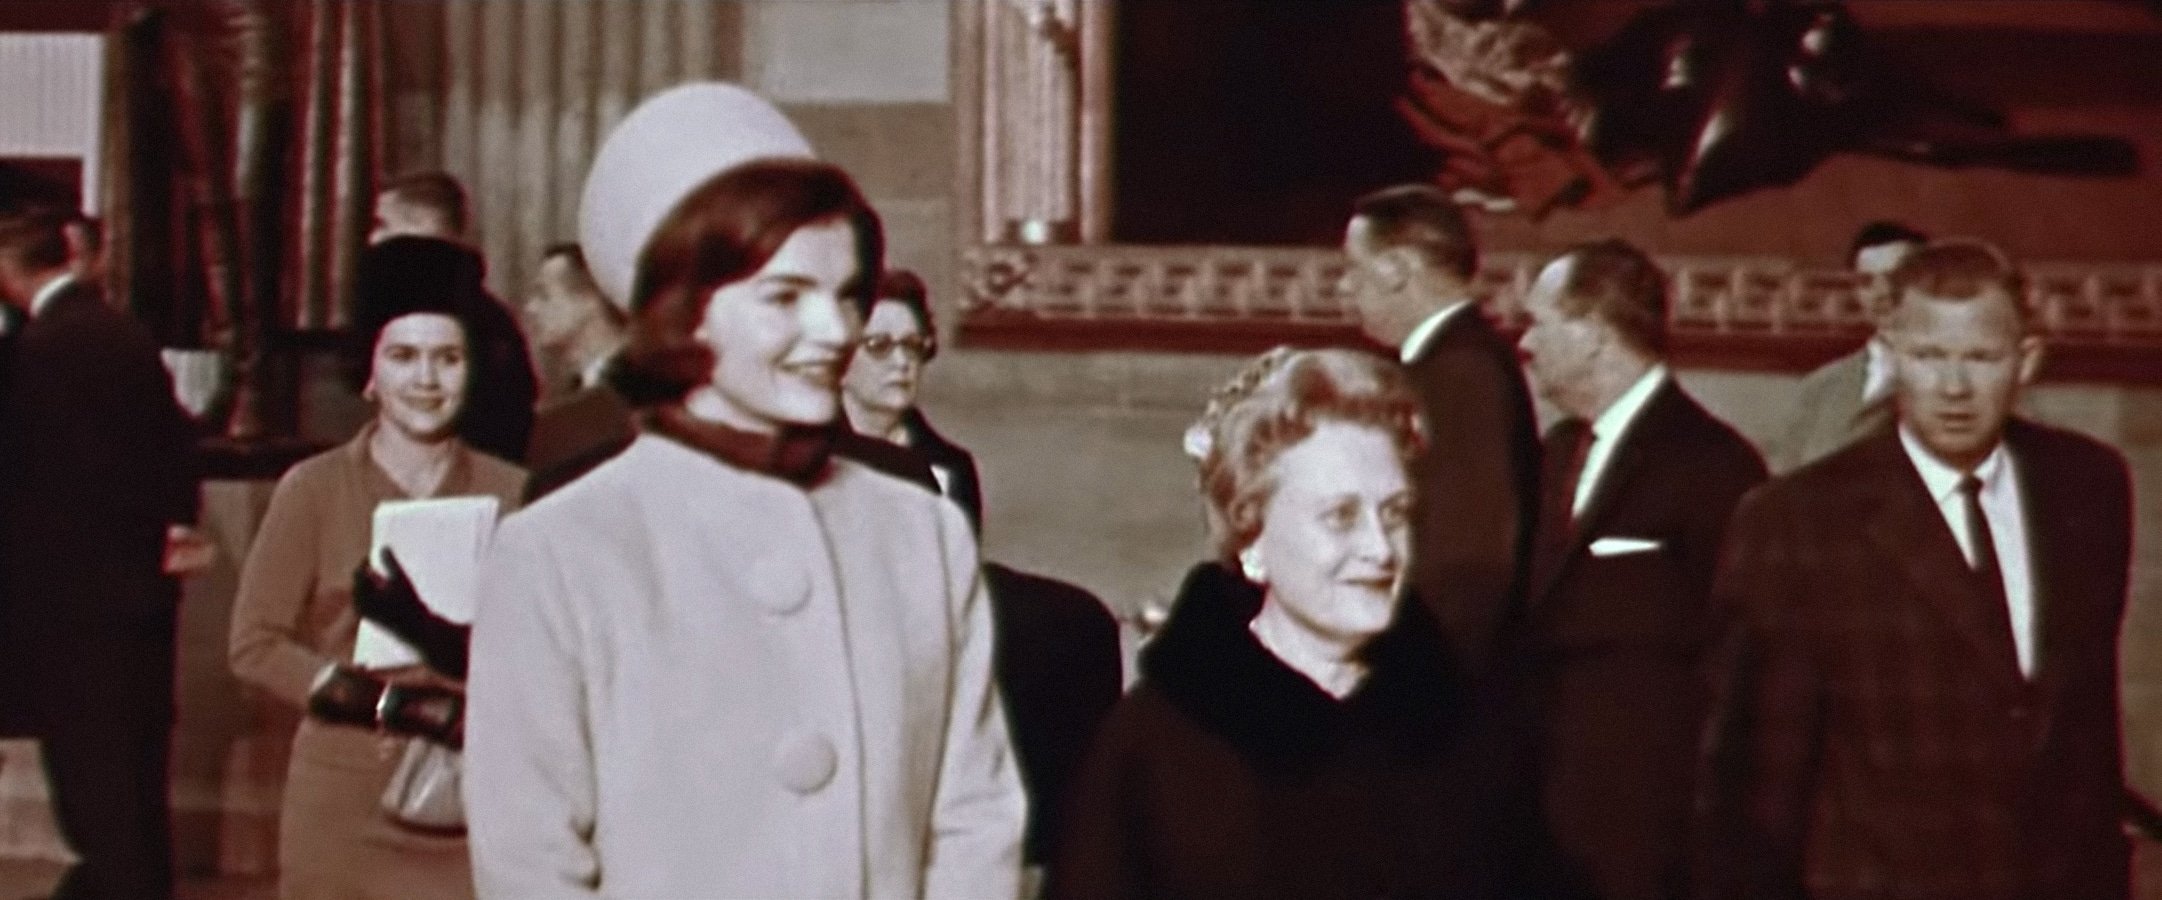 HALSTON, documentary, Jackie Kennedy (in Halston pillbox hat, on January 20, 1961), 2019